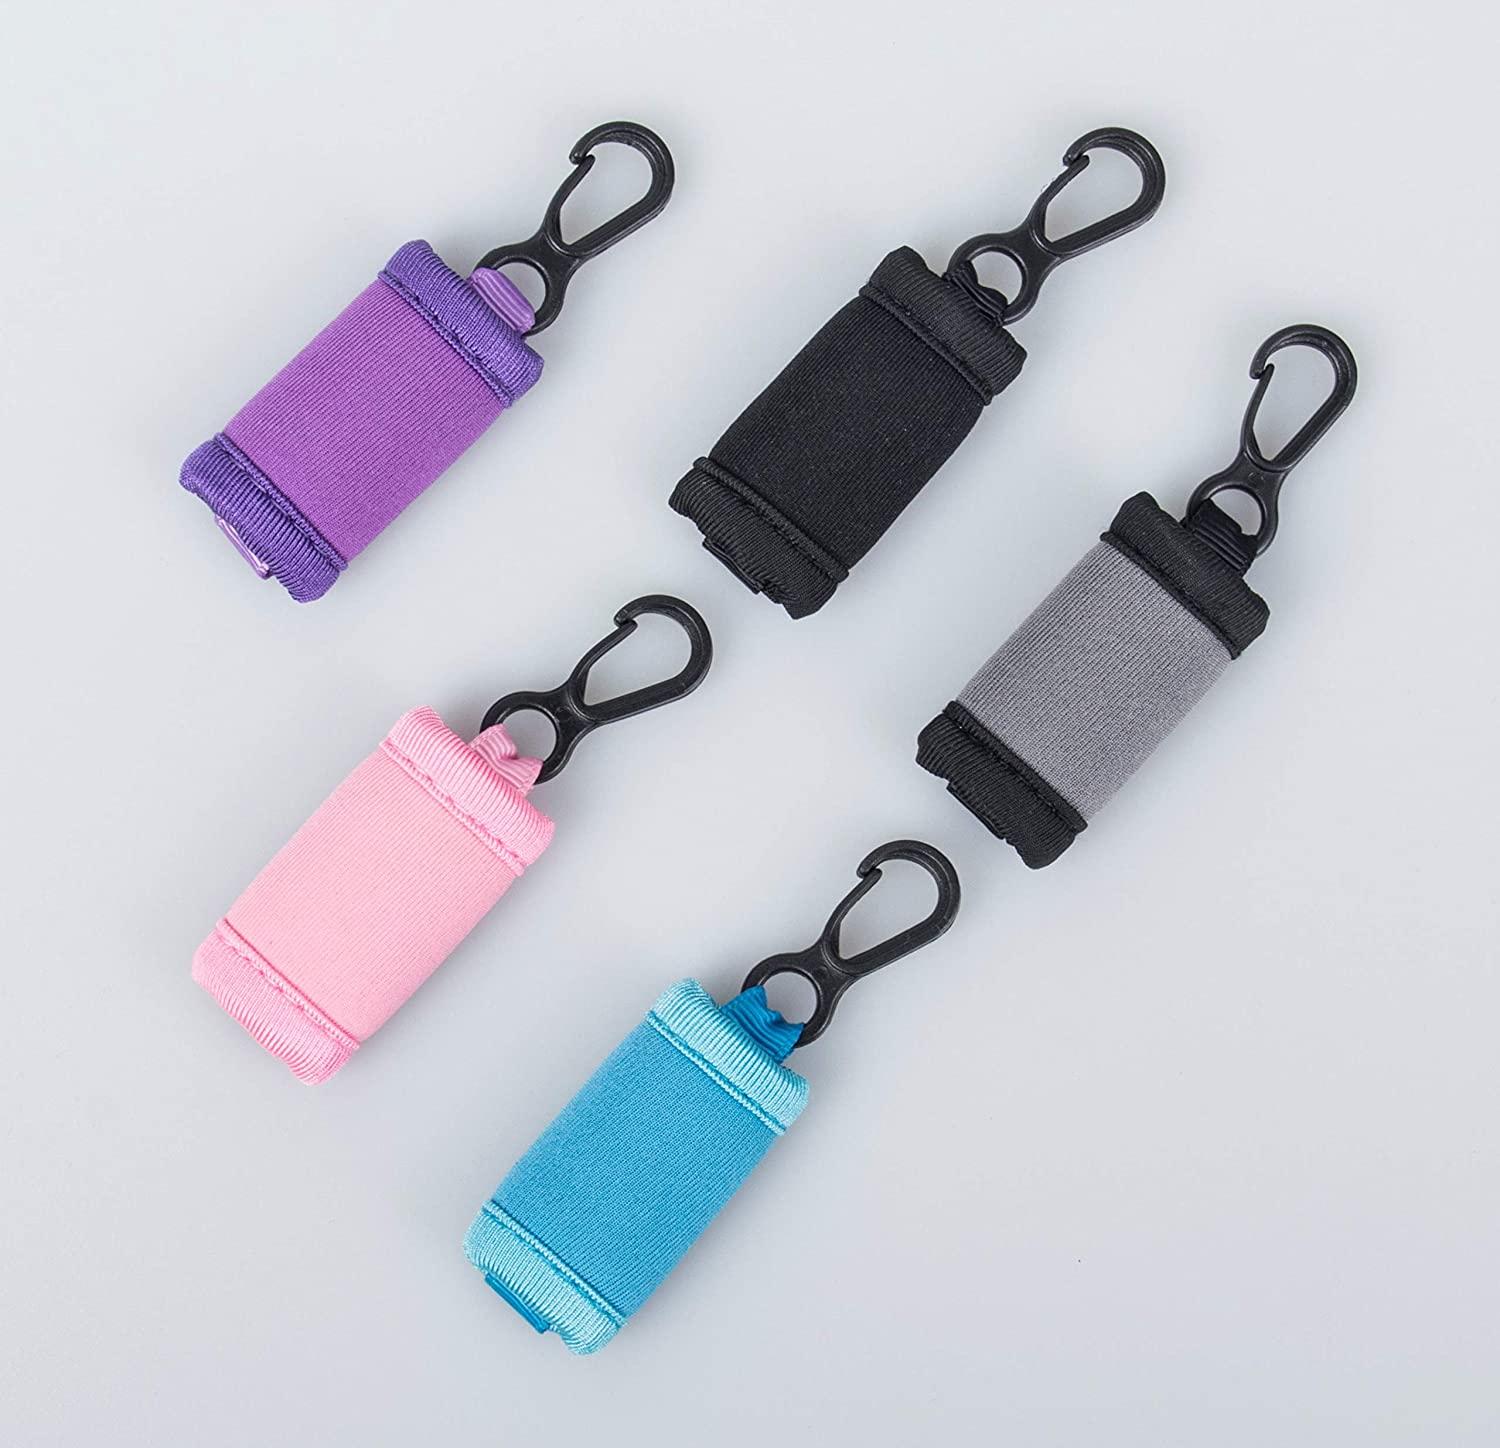  Desing Wish 6 PCS Mini Chapstick Holder Keychain Elastic  Sleeve Chapstick Keychain Holder for Lip Balms/Lip Gloss/Lipsticks,  Portable Lip Balm Holder Sleeves - Black : Beauty & Personal Care